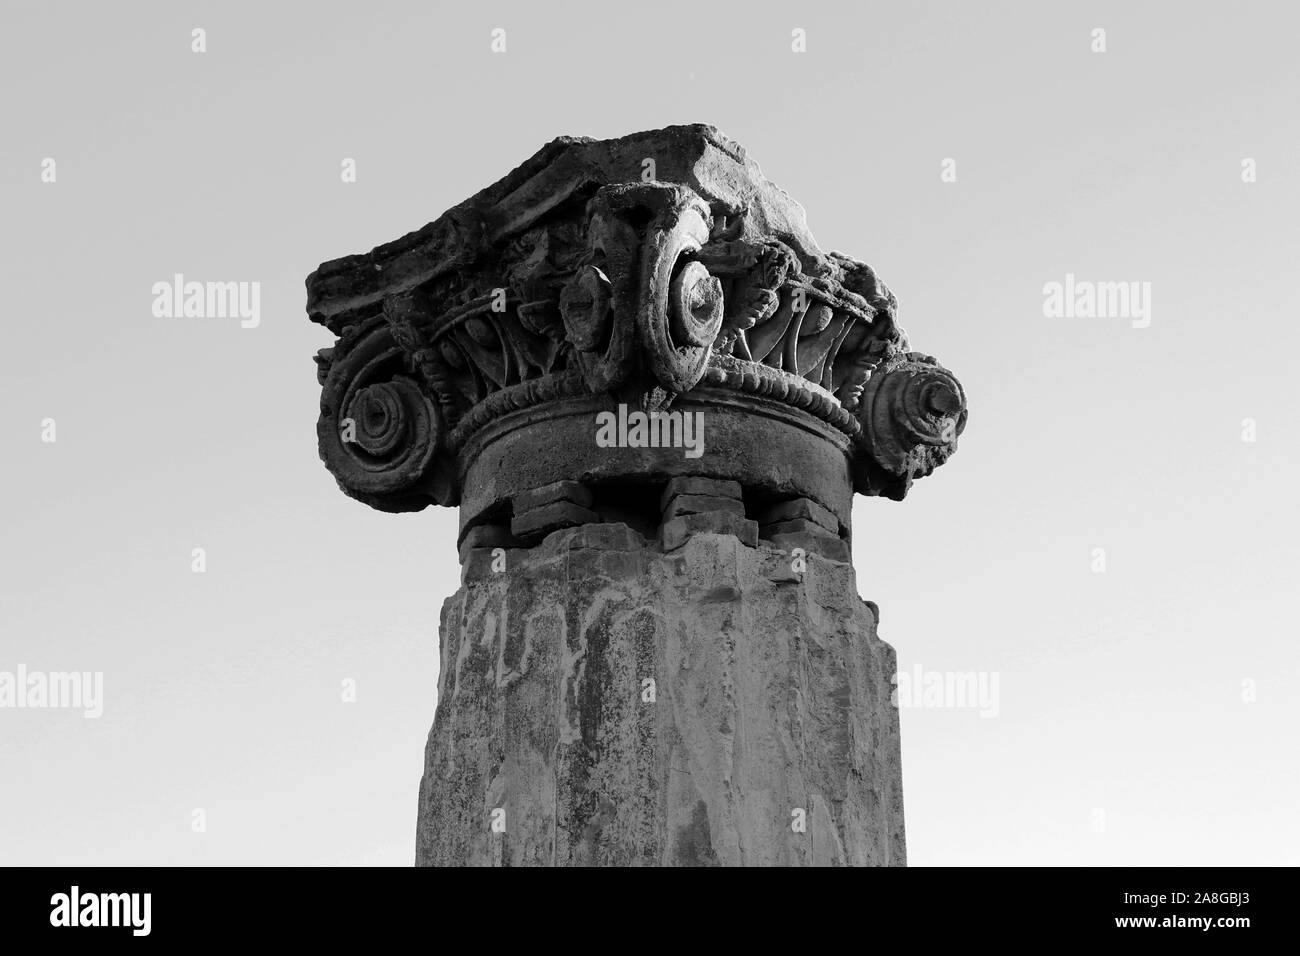 Ancient roman greek column with broken chapiter. Pompeii, Italy. Black and white photo Stock Photo